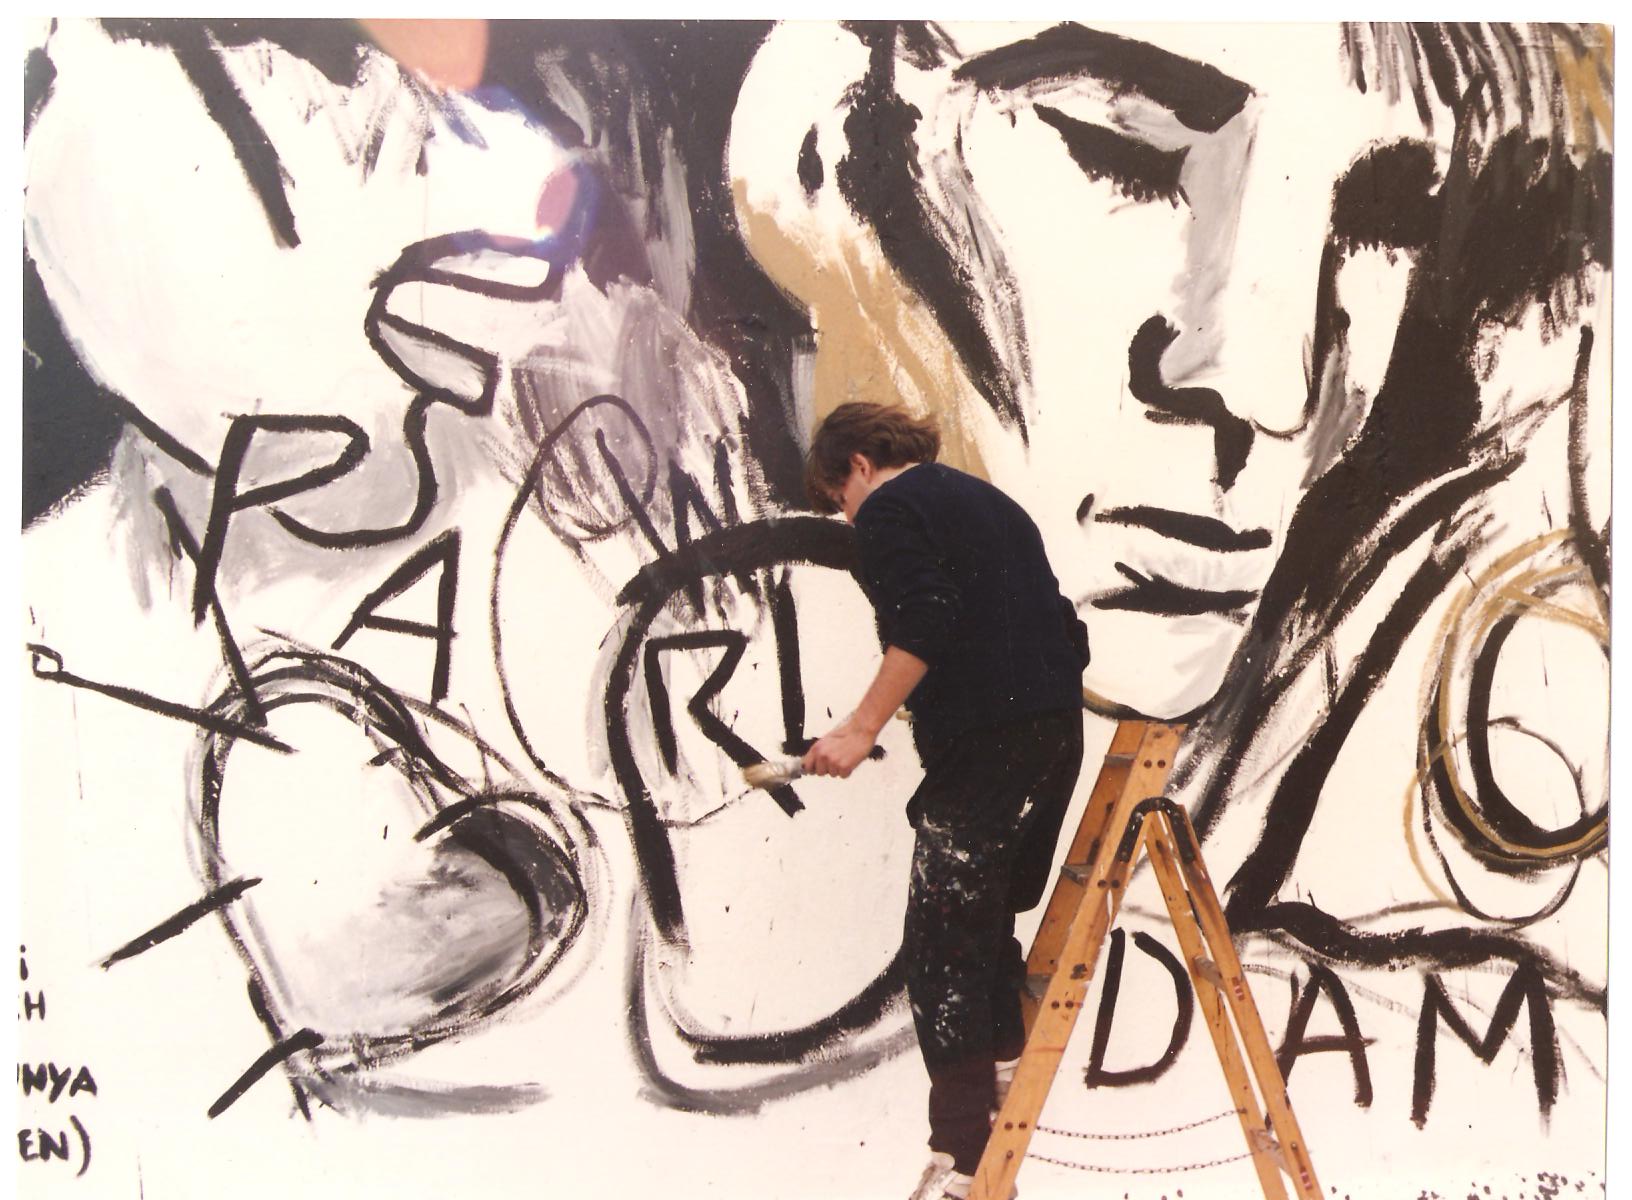 Ignasi Blanch working on his East Side Gallery mural in Berlin in 1990 (Source: Ignasi Blanch)